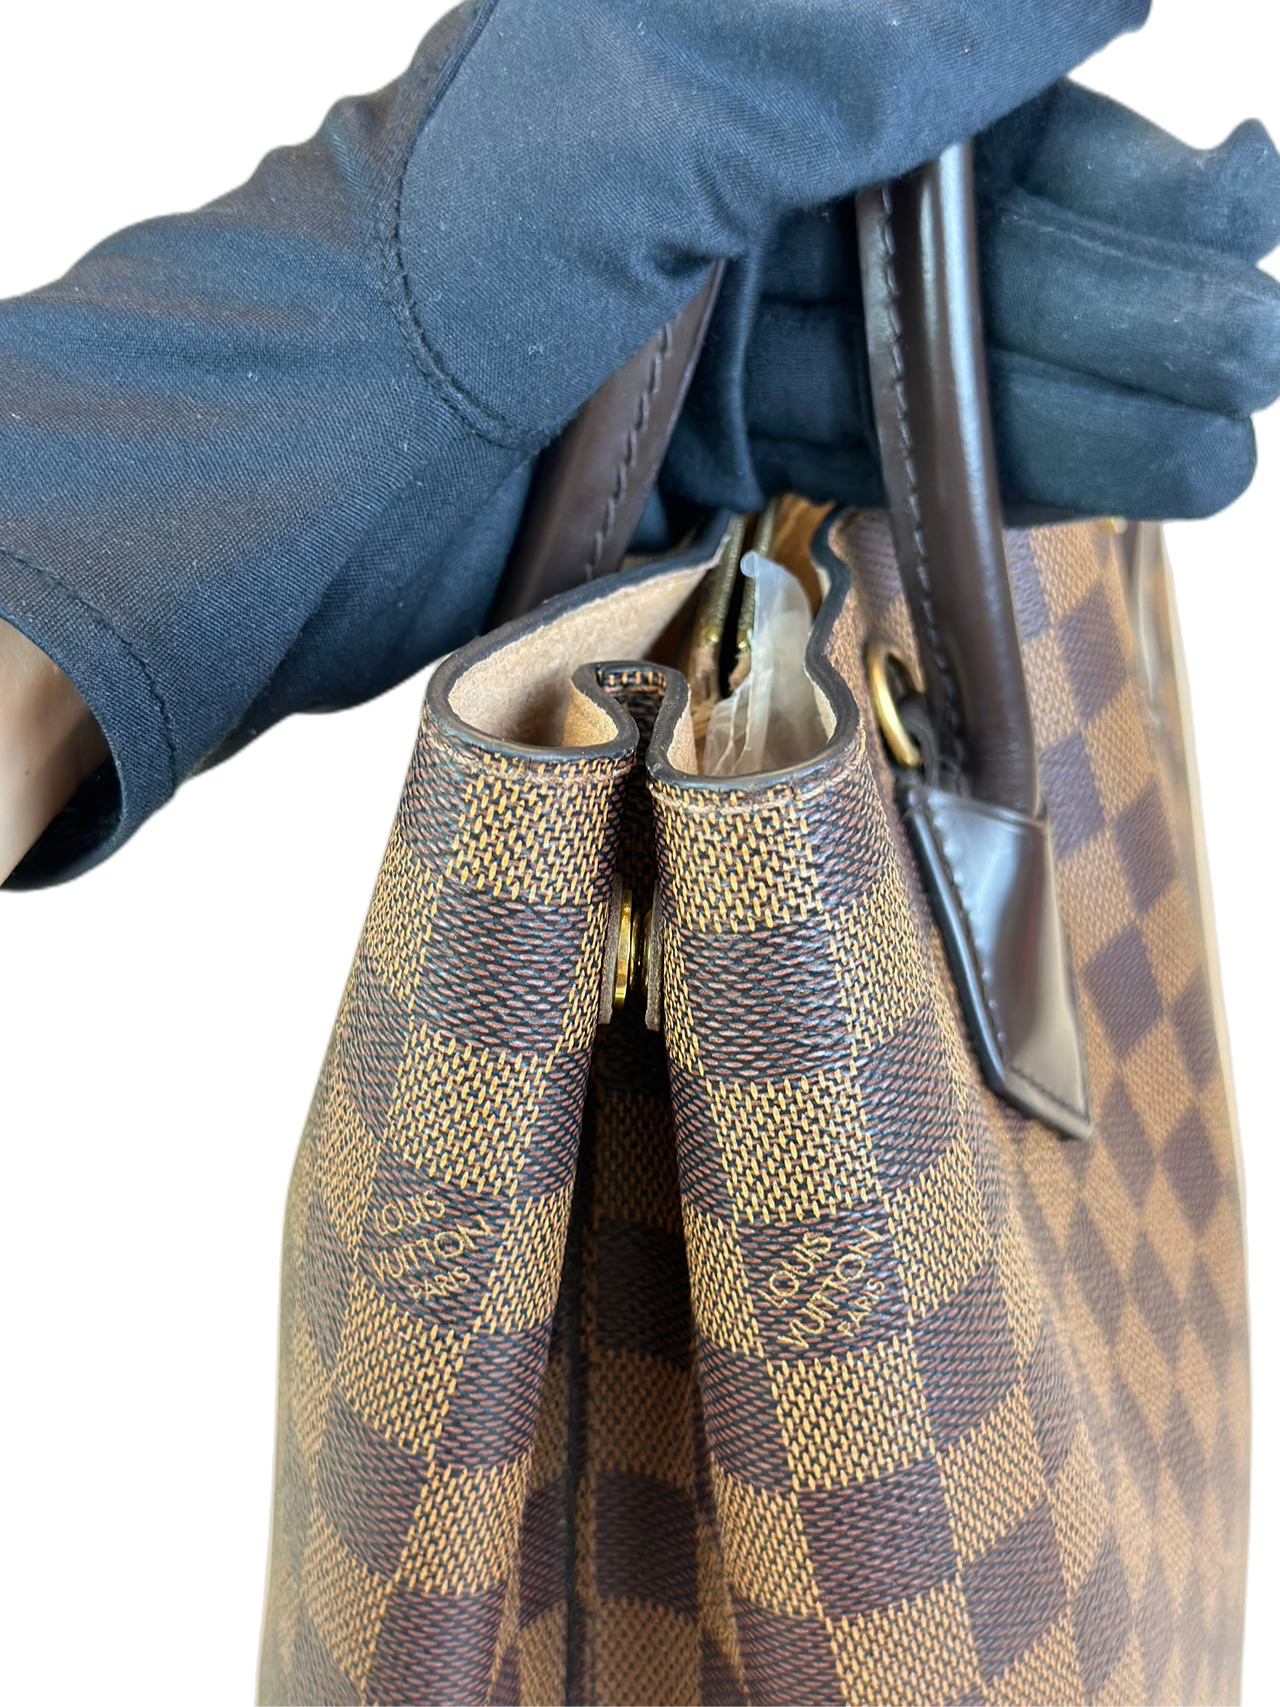 Preloved Louis Vuitton Damier Ebene Kensington Satchel handbag